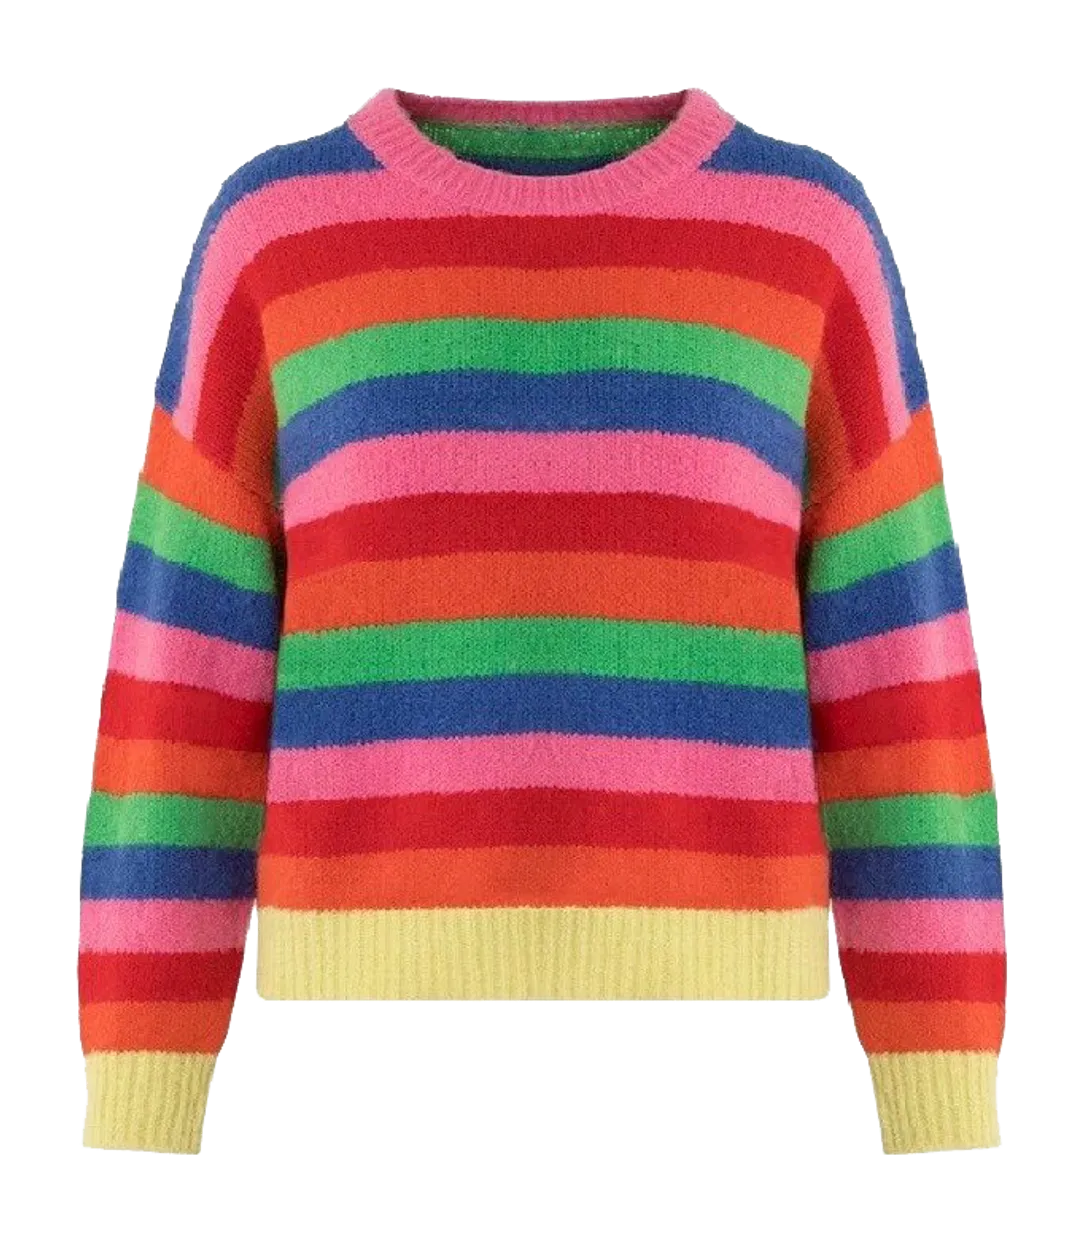 Colorpop striped knit